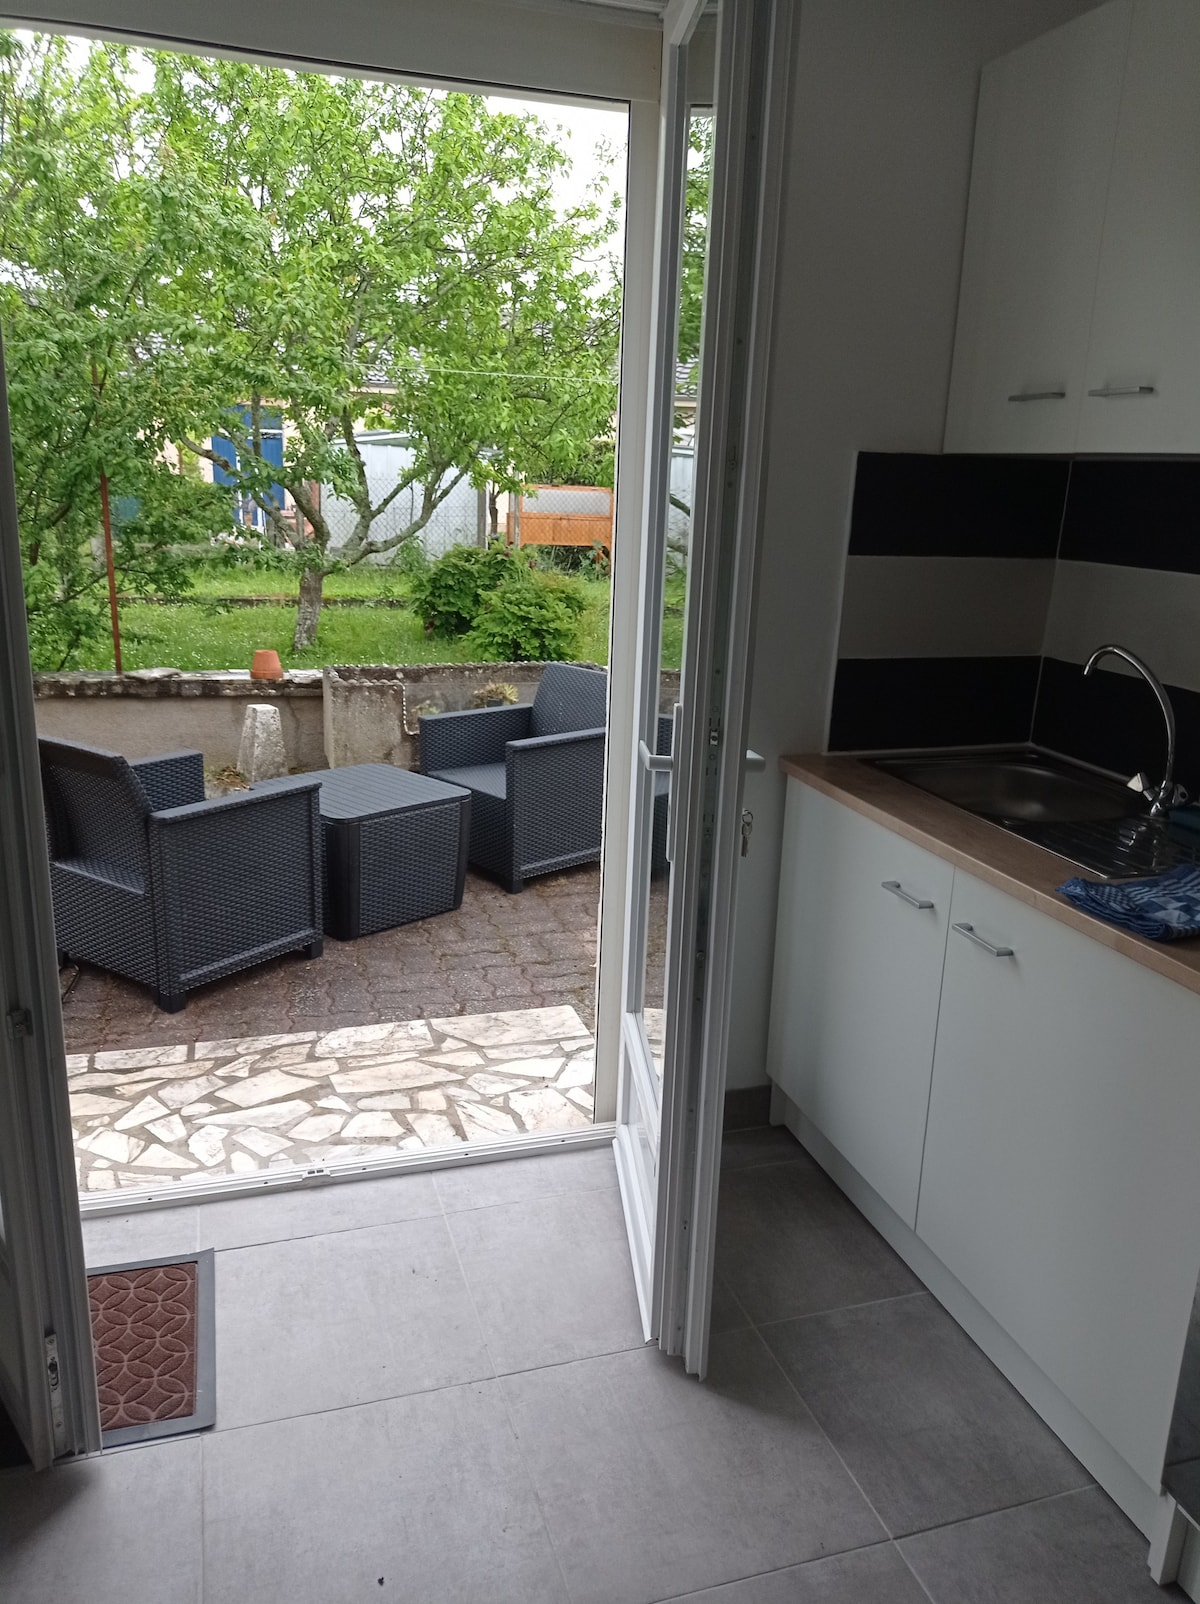 Appartement en rez de jardin avec terrasse.